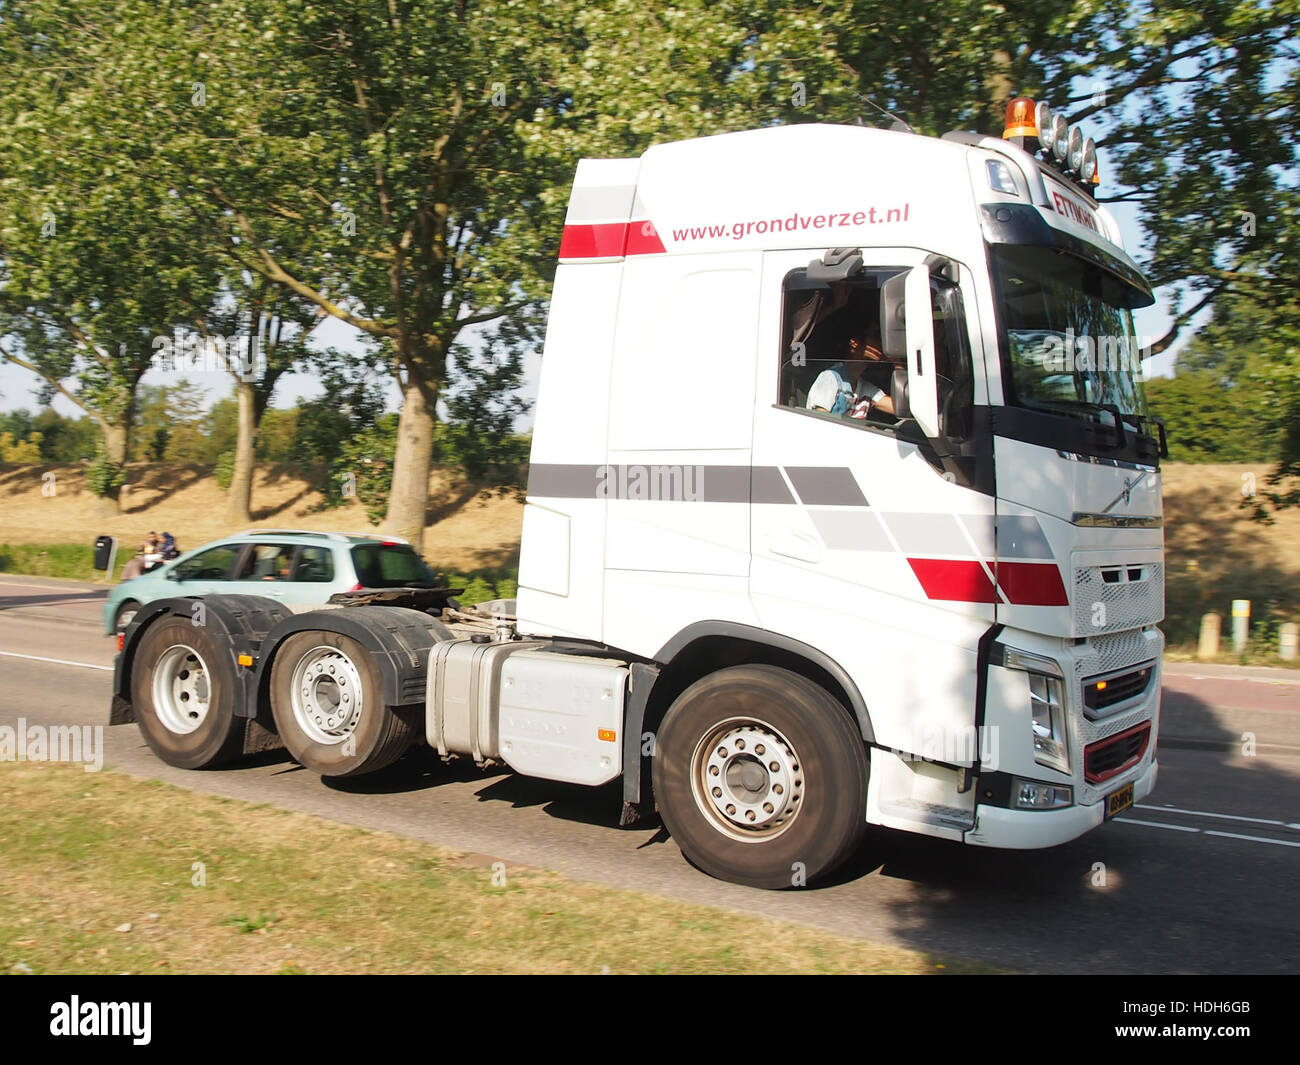 Volvo Lkw, van Ettinkhoven, Truckrun 2016 pic2 Stockfoto